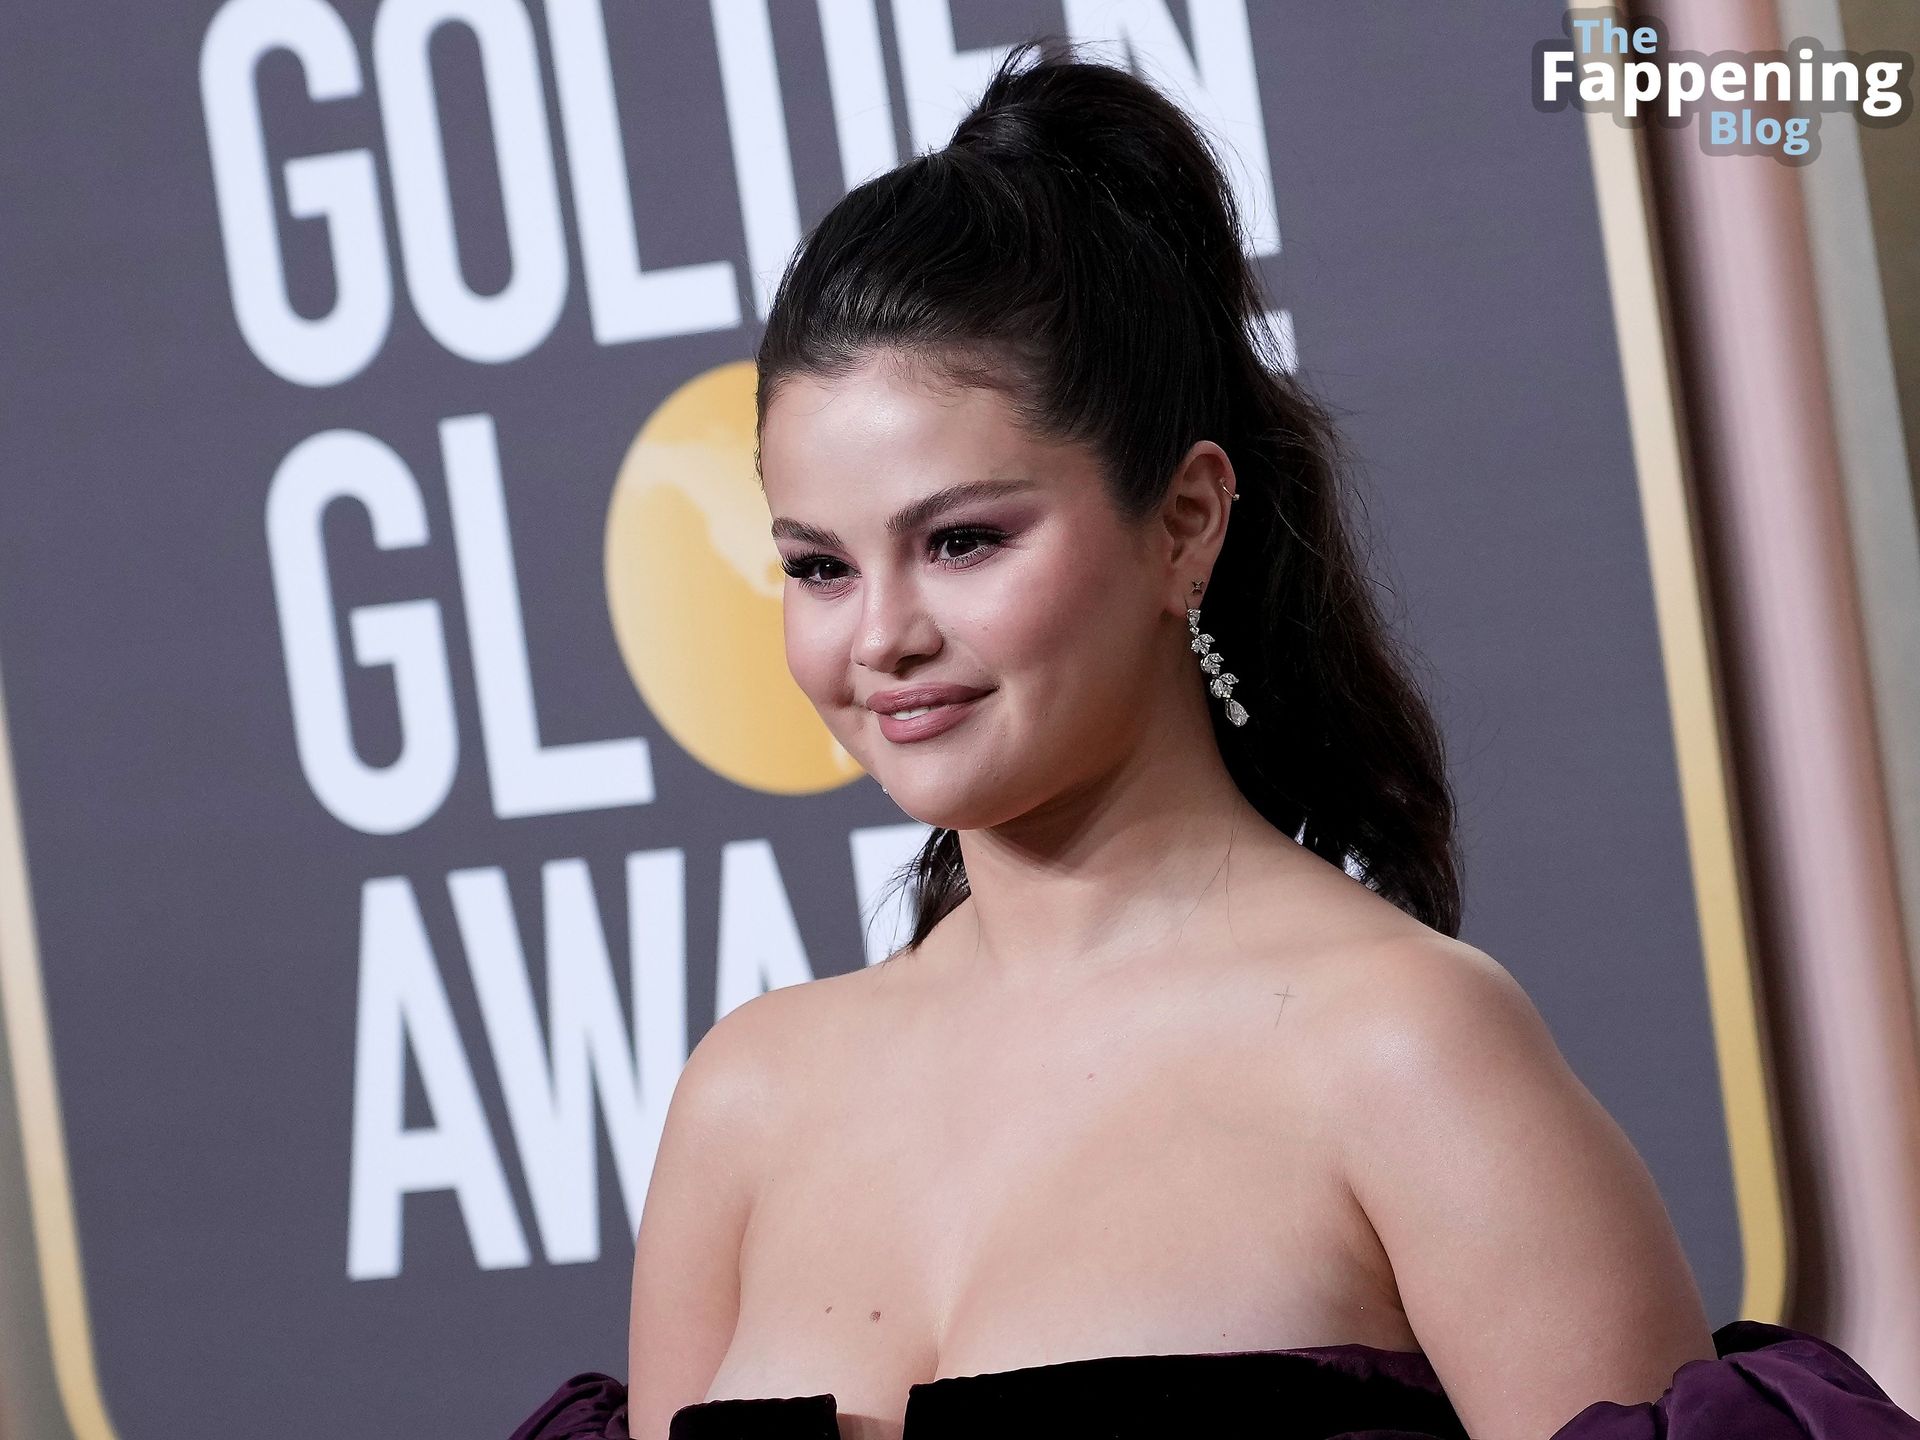 Selena-Gomez-Sexy-The-Fappening-Blog-4.jpg